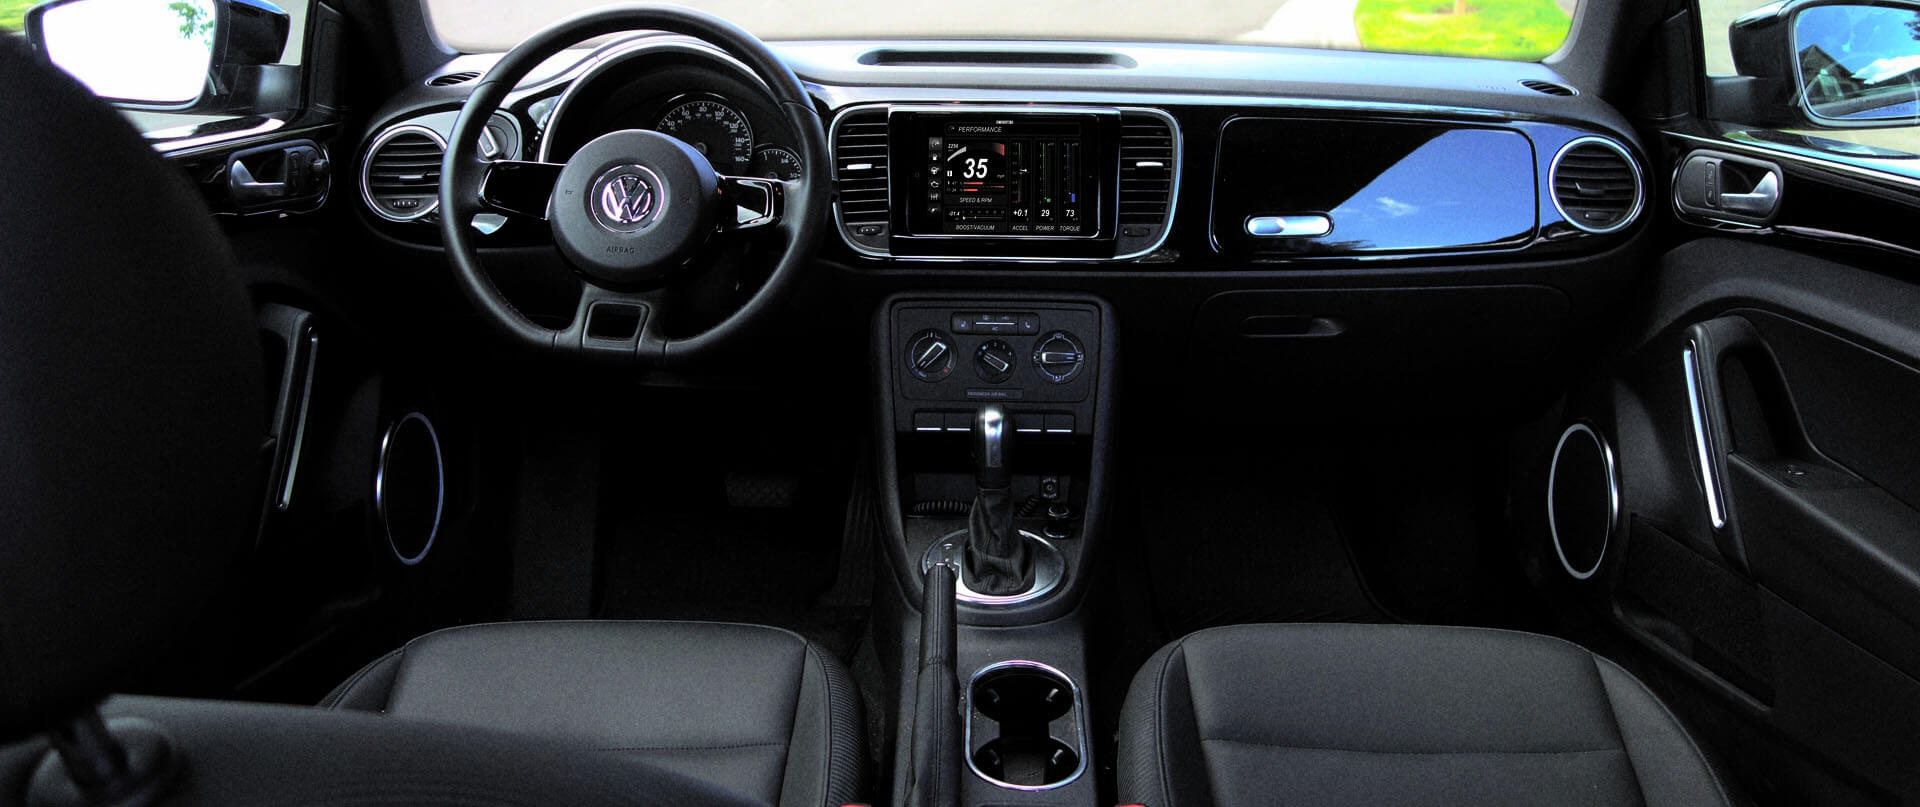 Volkswagen Tiguan dash kit